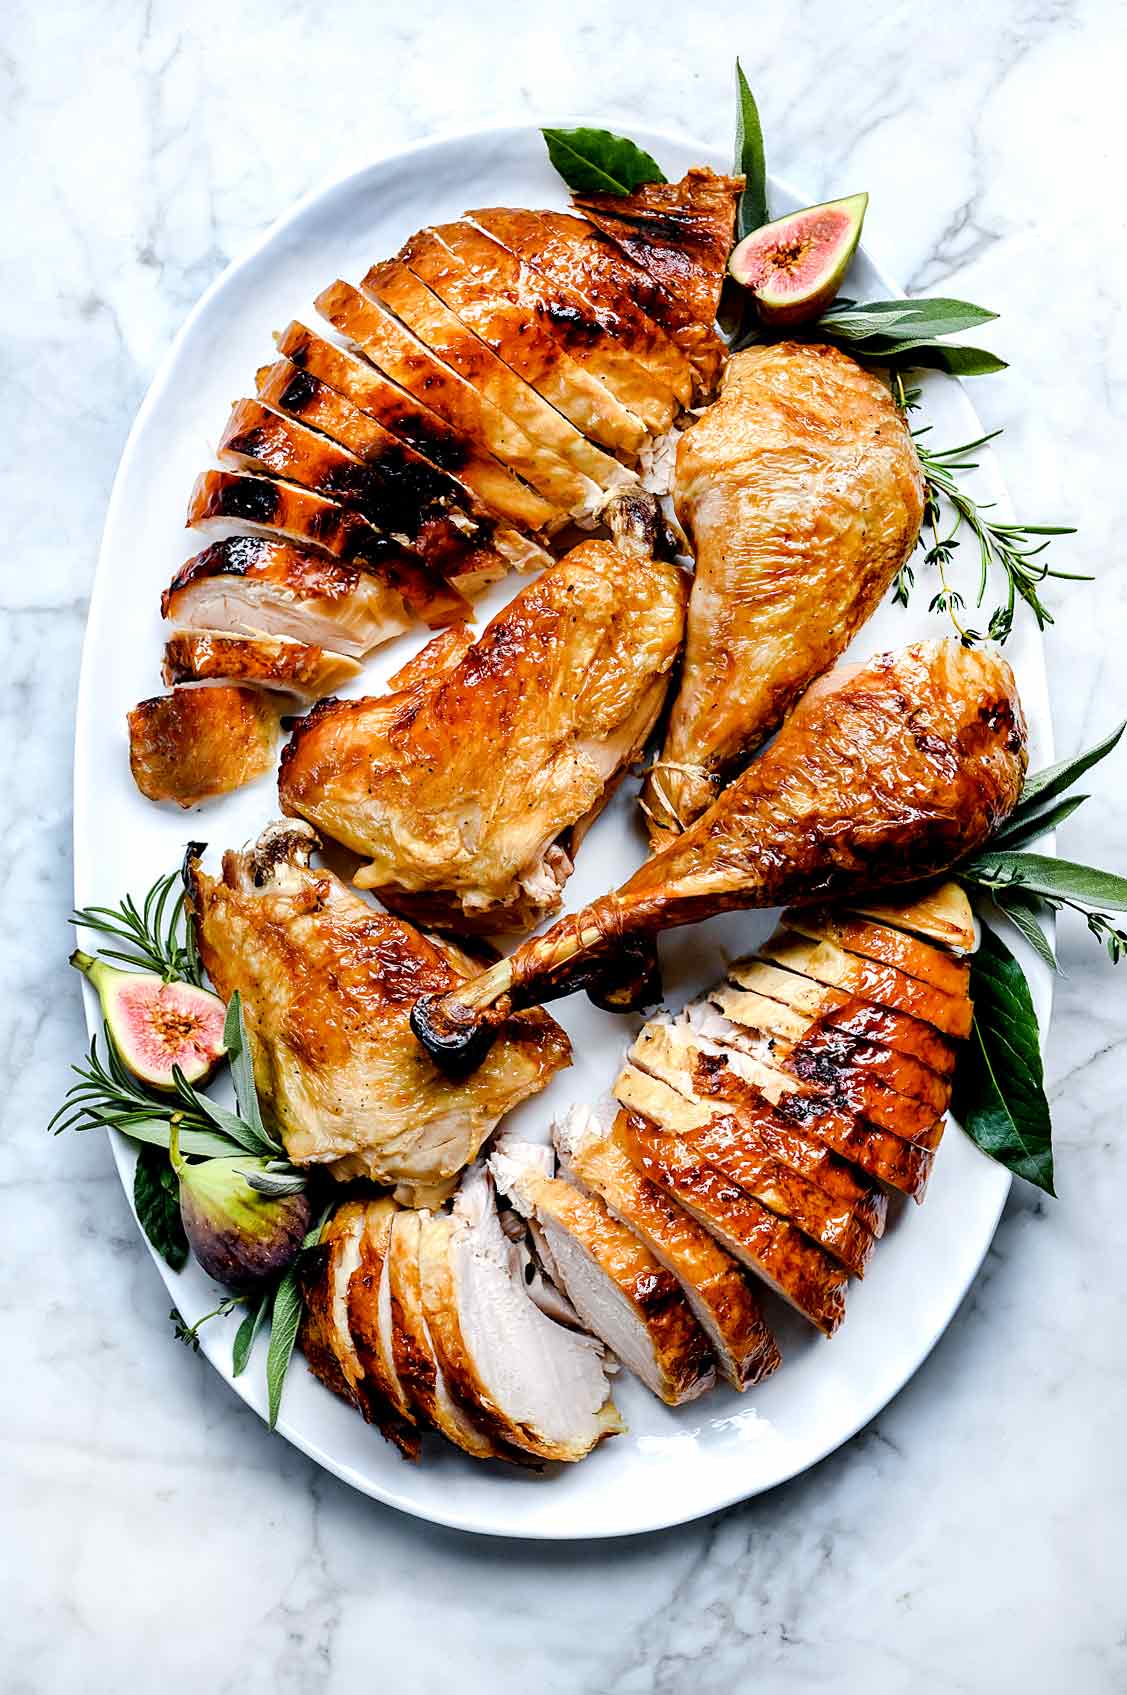 https://www.foodiecrush.com/wp-content/uploads/2019/11/How-to-Cook-a-Turkey-foodiecrush.com-091.jpg